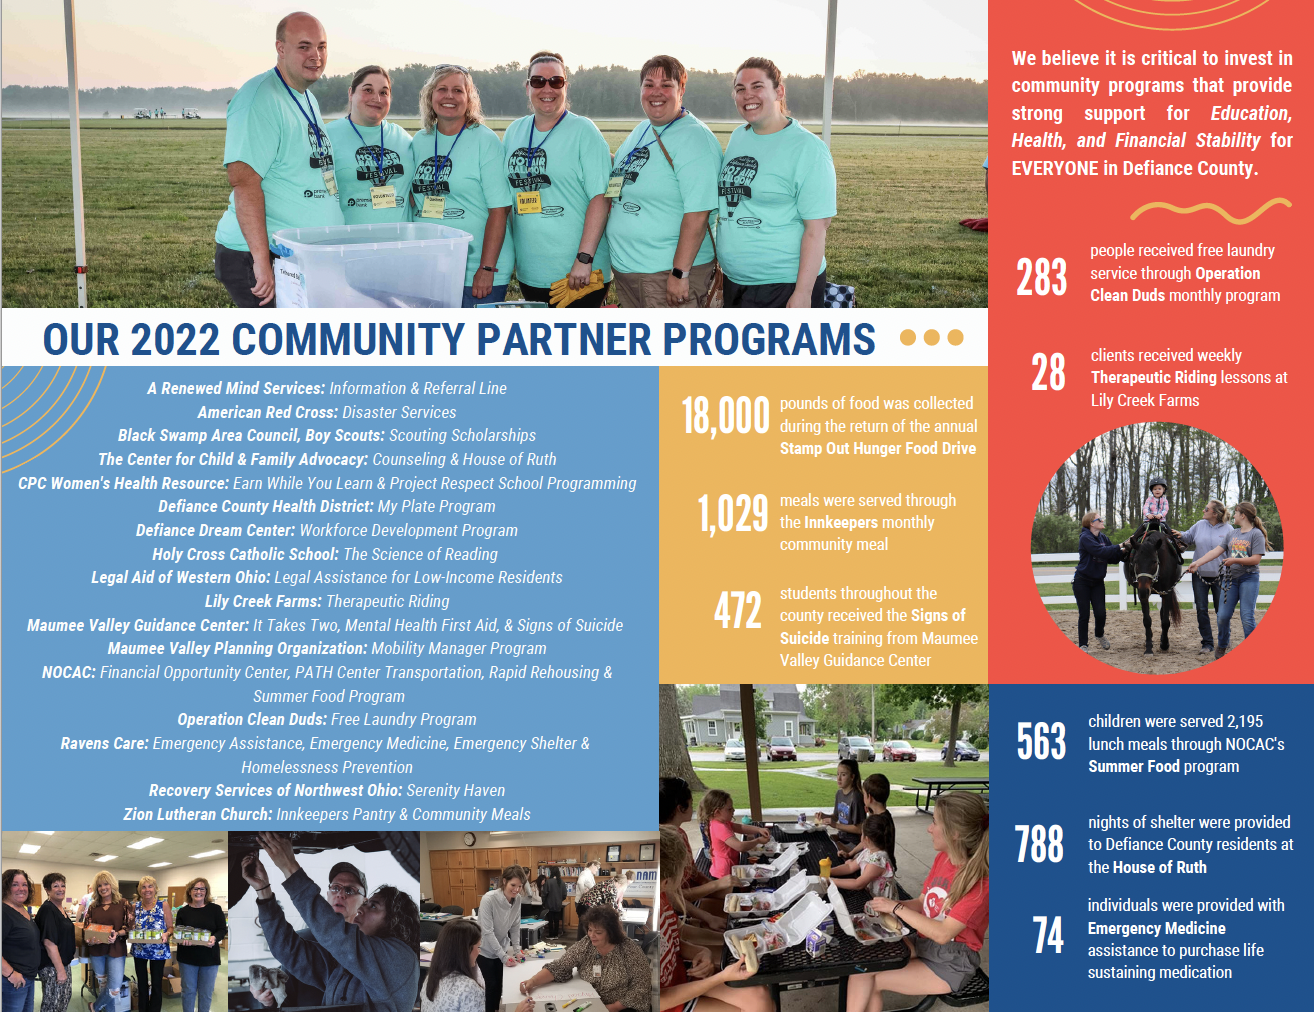 2023 Community Impact Report